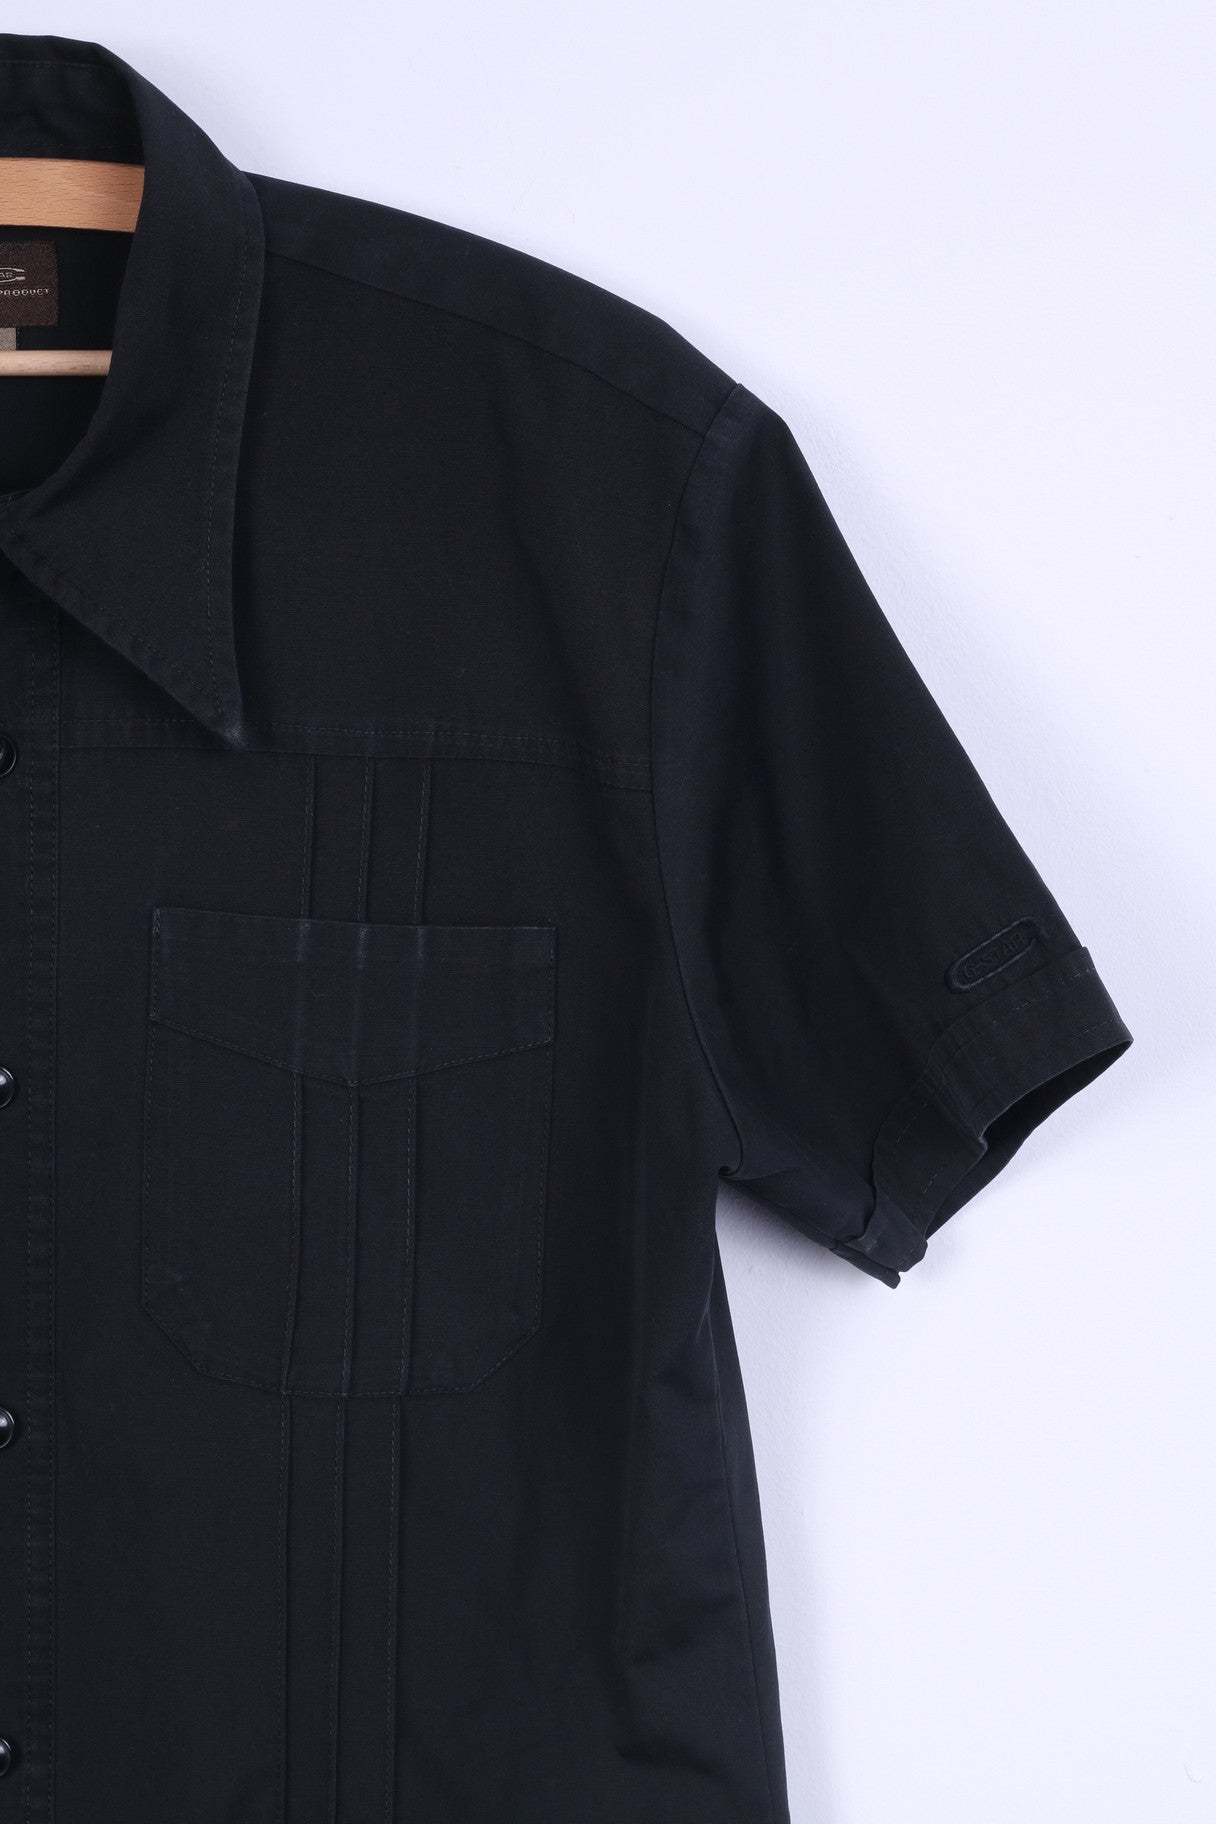 G-Star Mens L Casual Shirt Short Sleeve Black Cotton